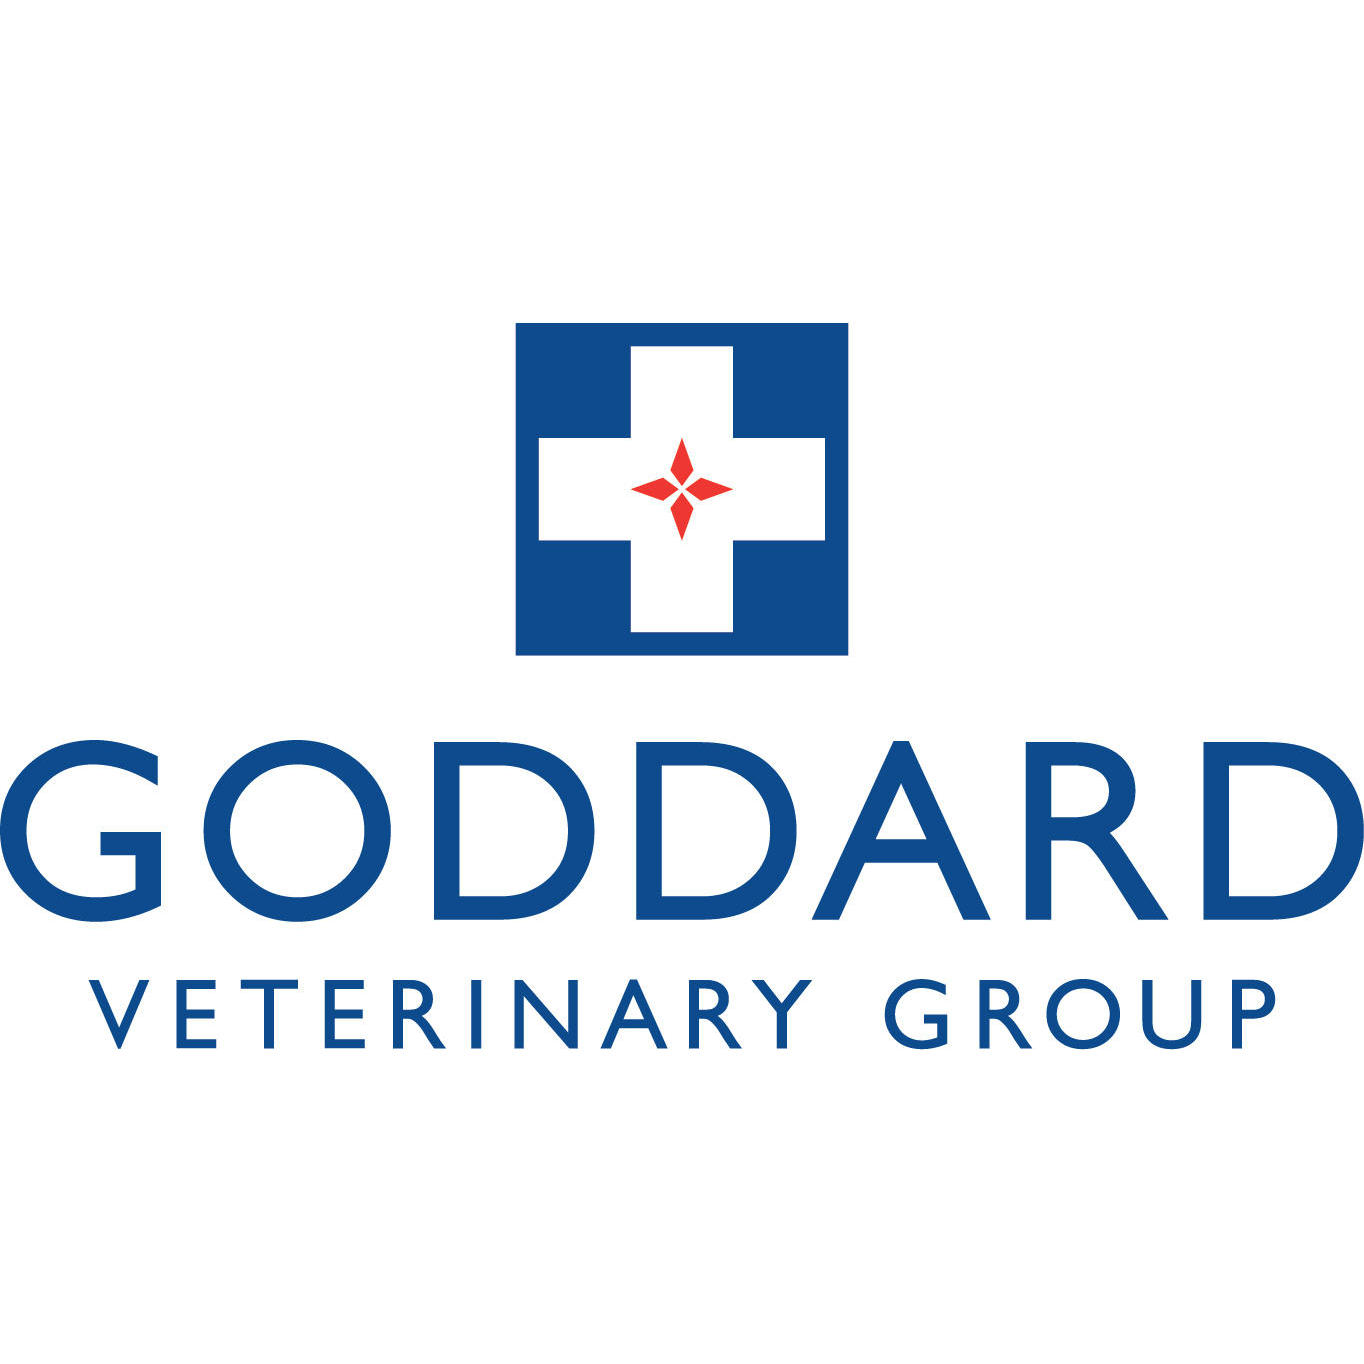 Goddard Veterinary Group, Barking Barking 020 8594 8082